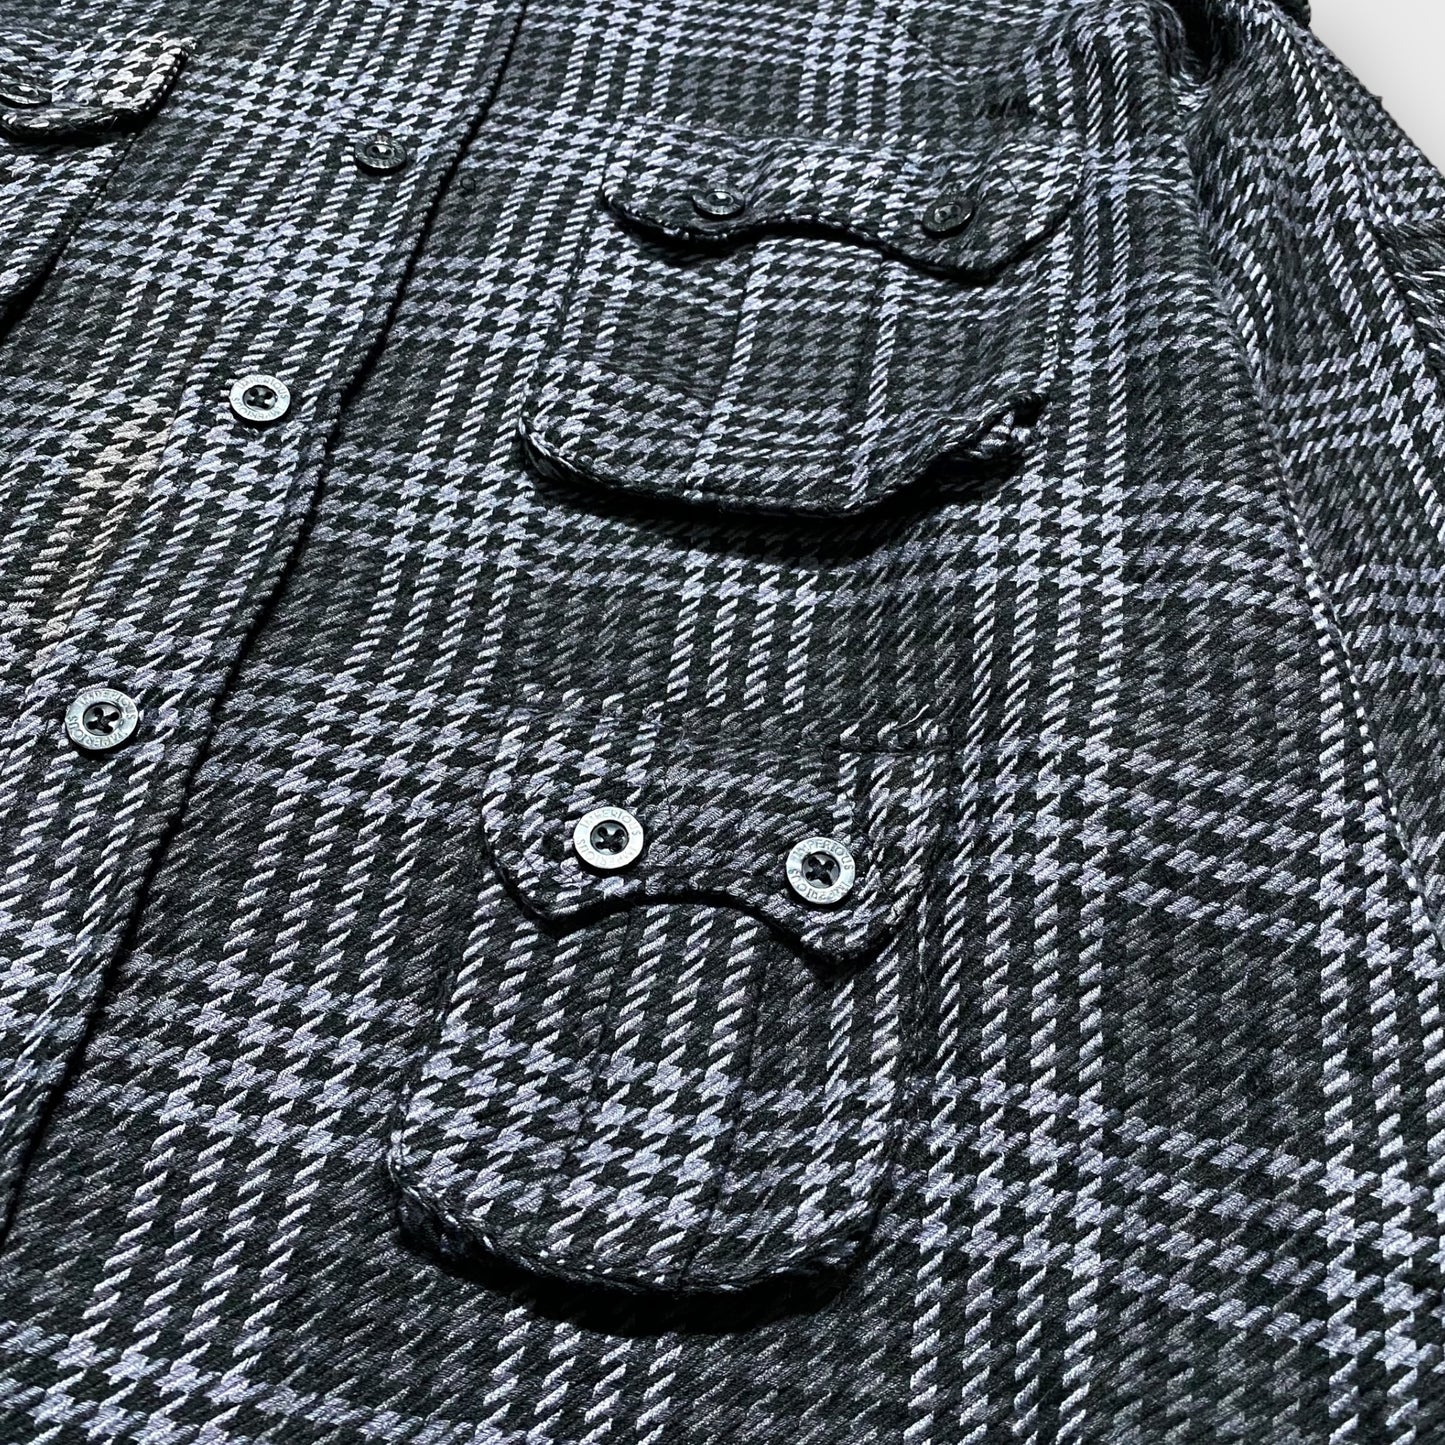 Houndstooth pattern multi pocket shirt jacket